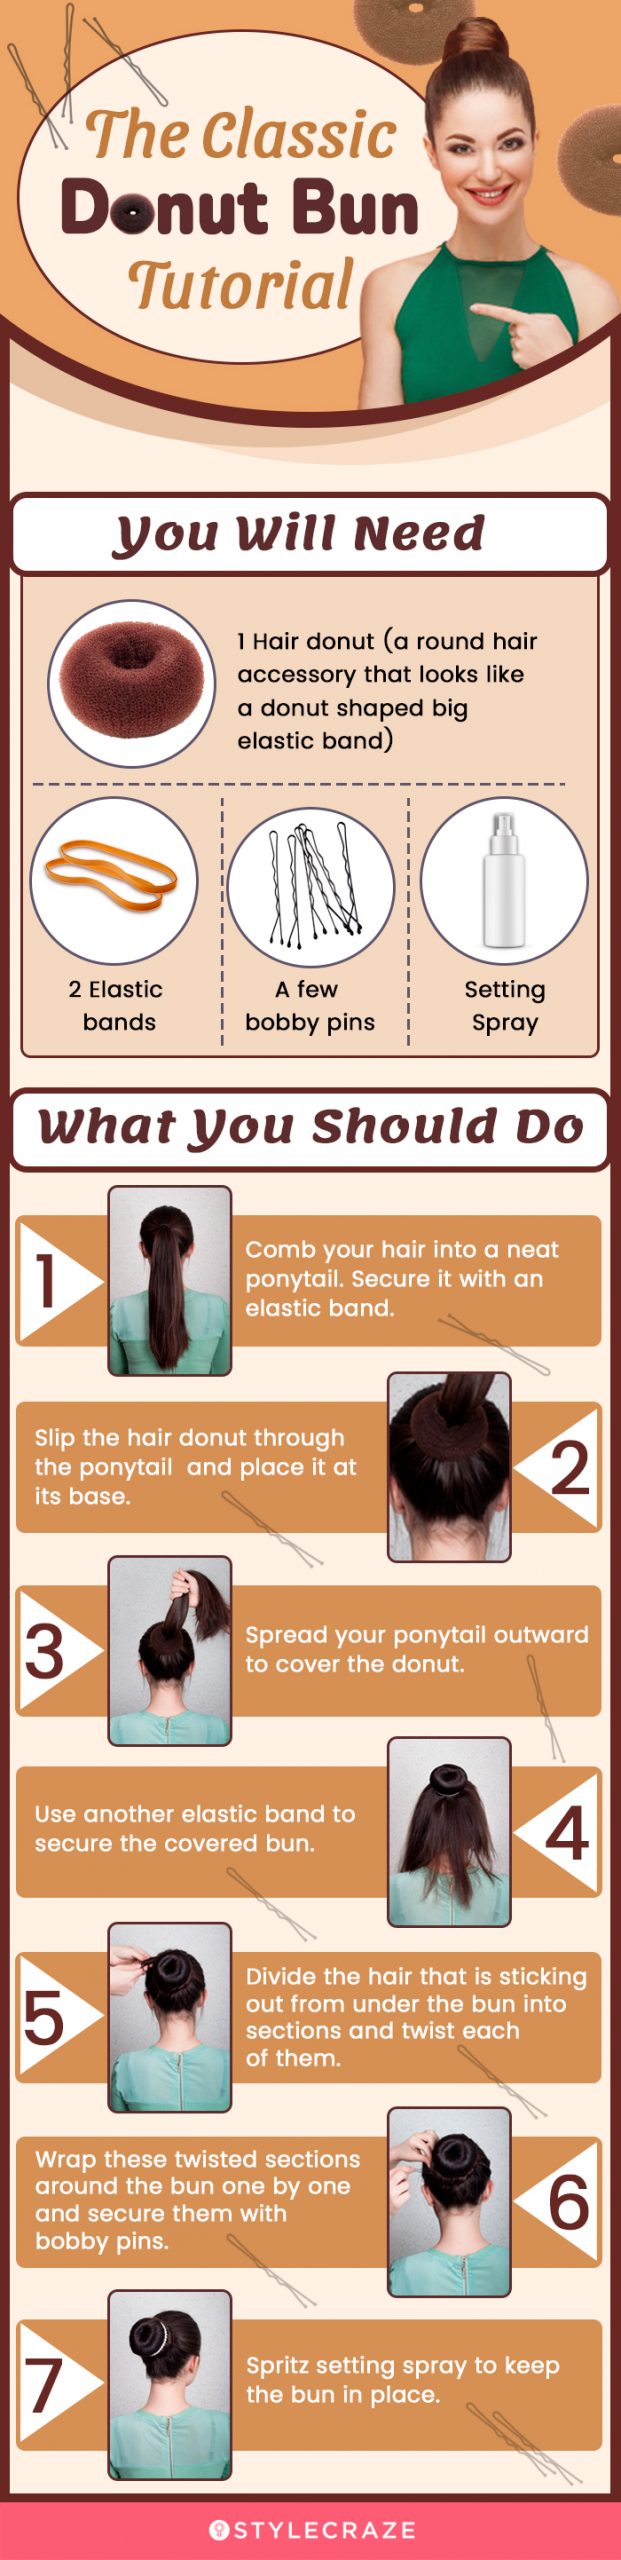 the classic donut bun tutorial [infographic]